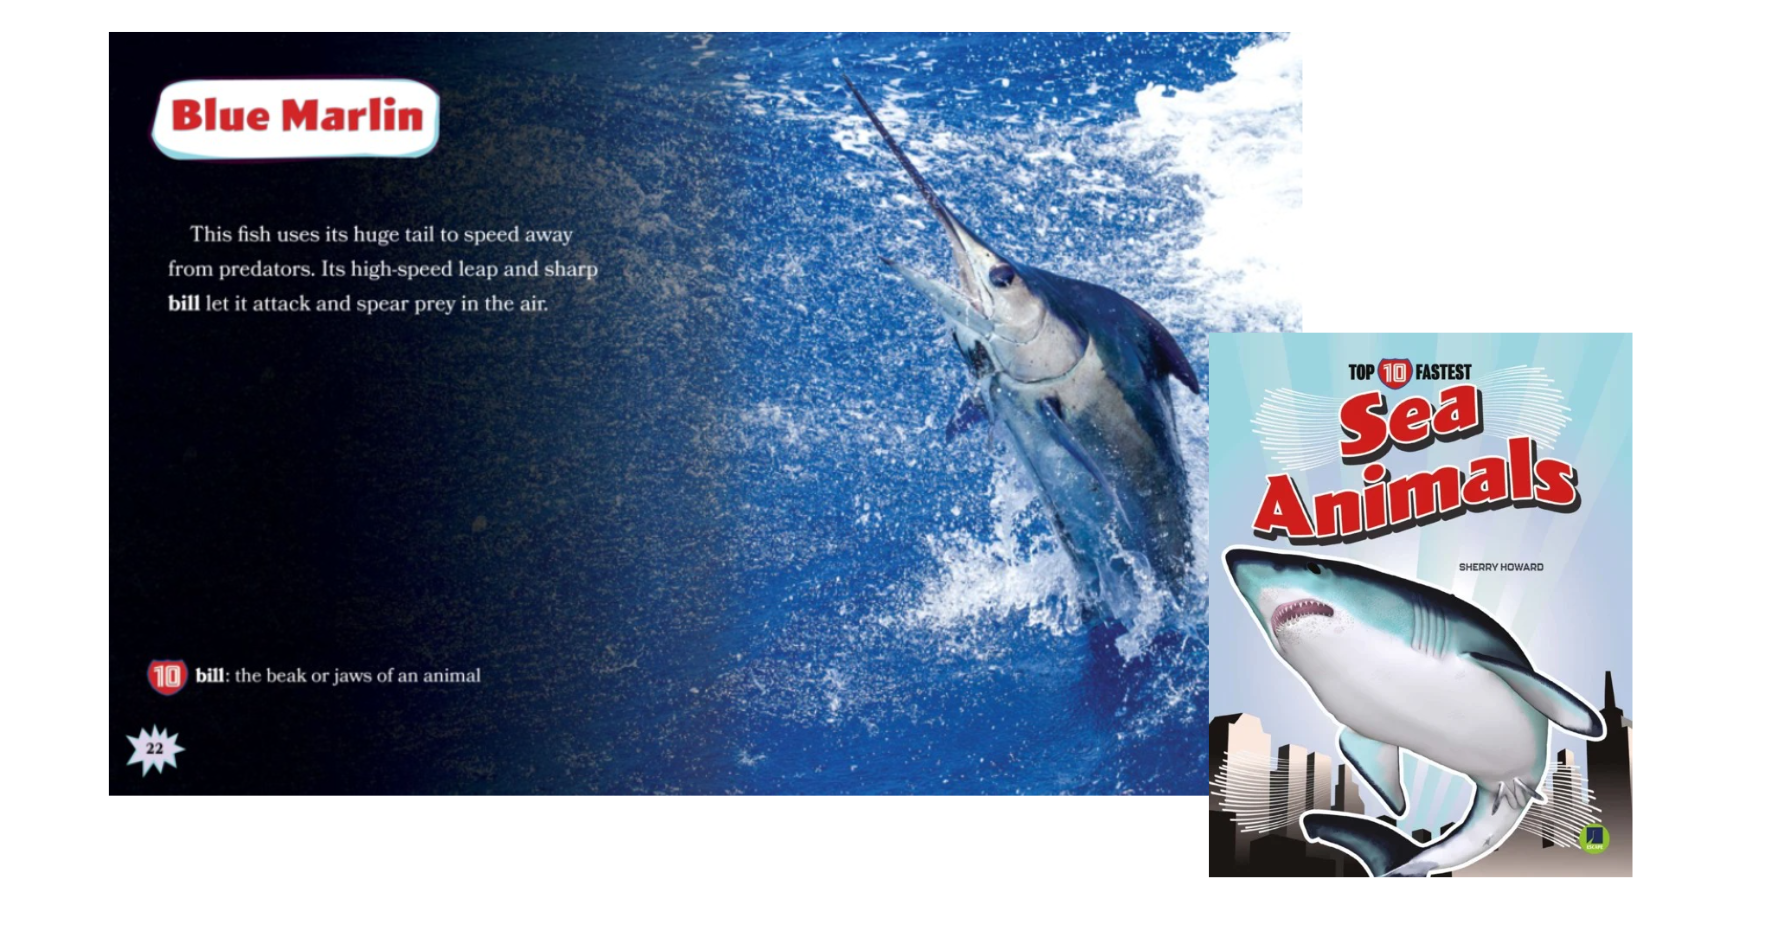 Ocean books for kids - Top 10 Fastest Sea Animals